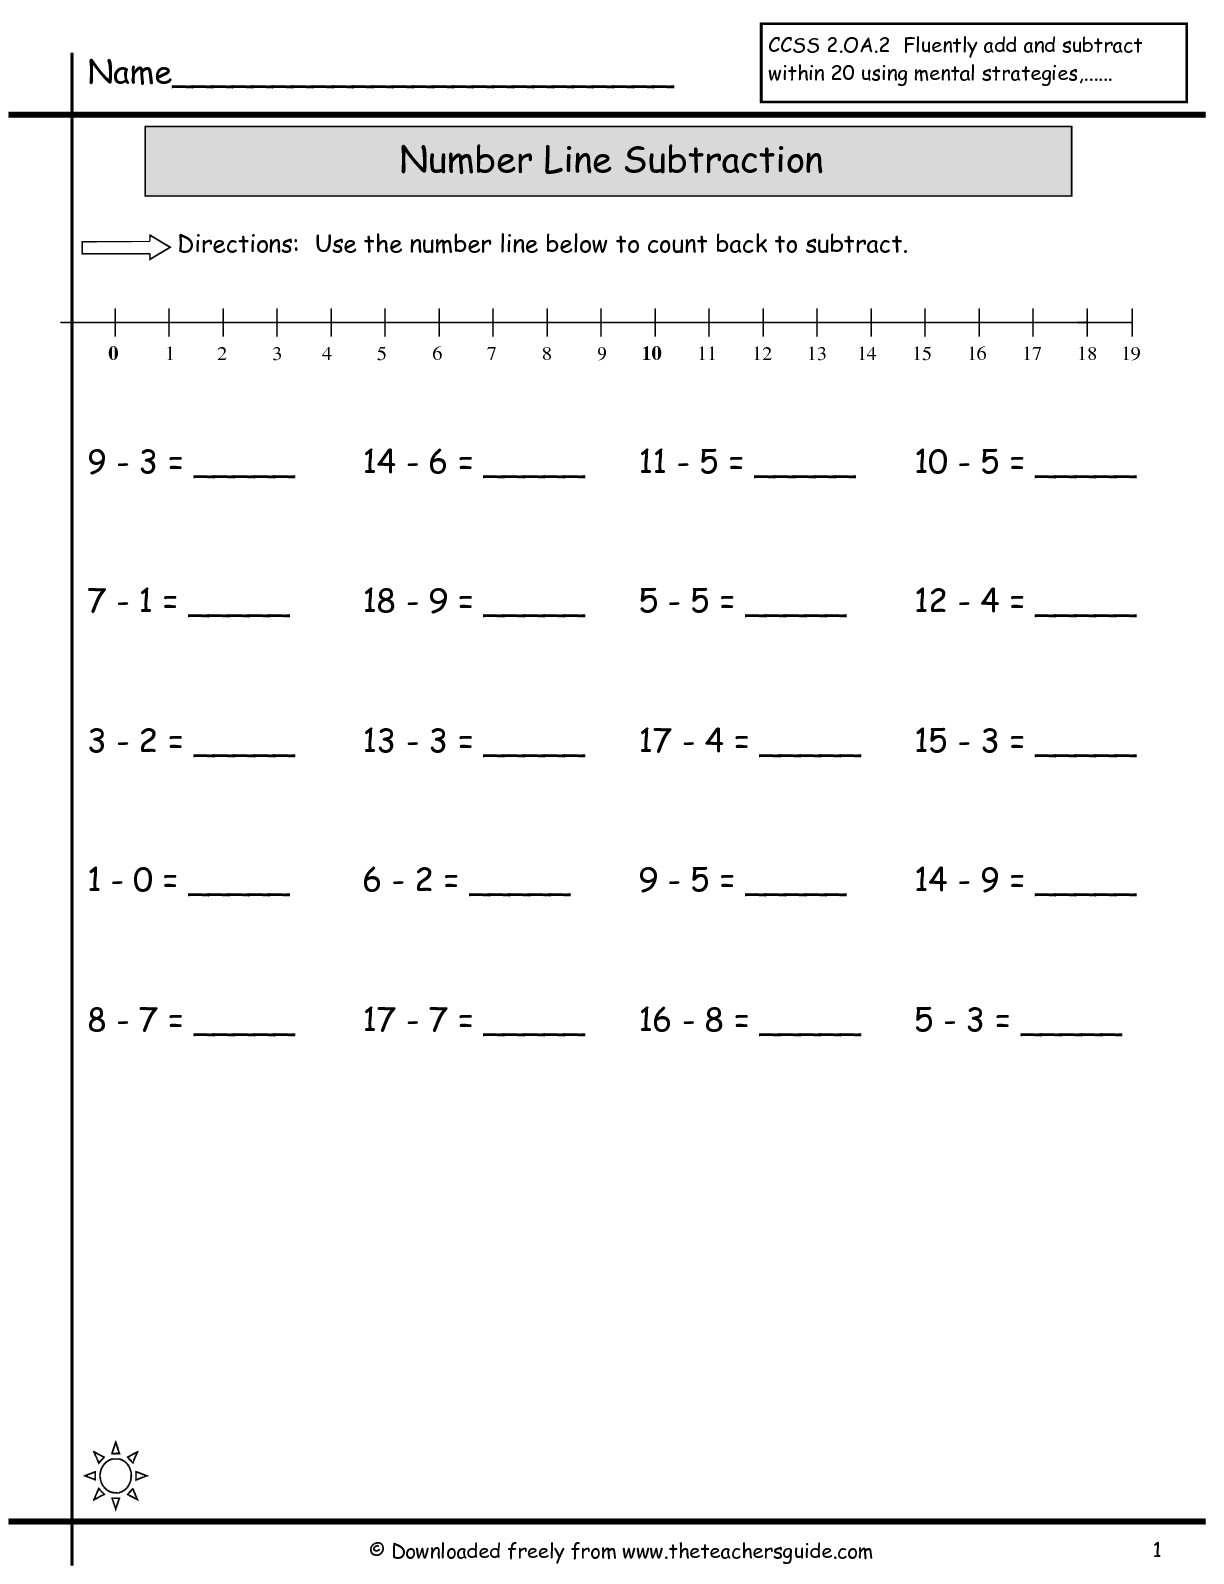 Subtraction with Number Line Worksheet Image